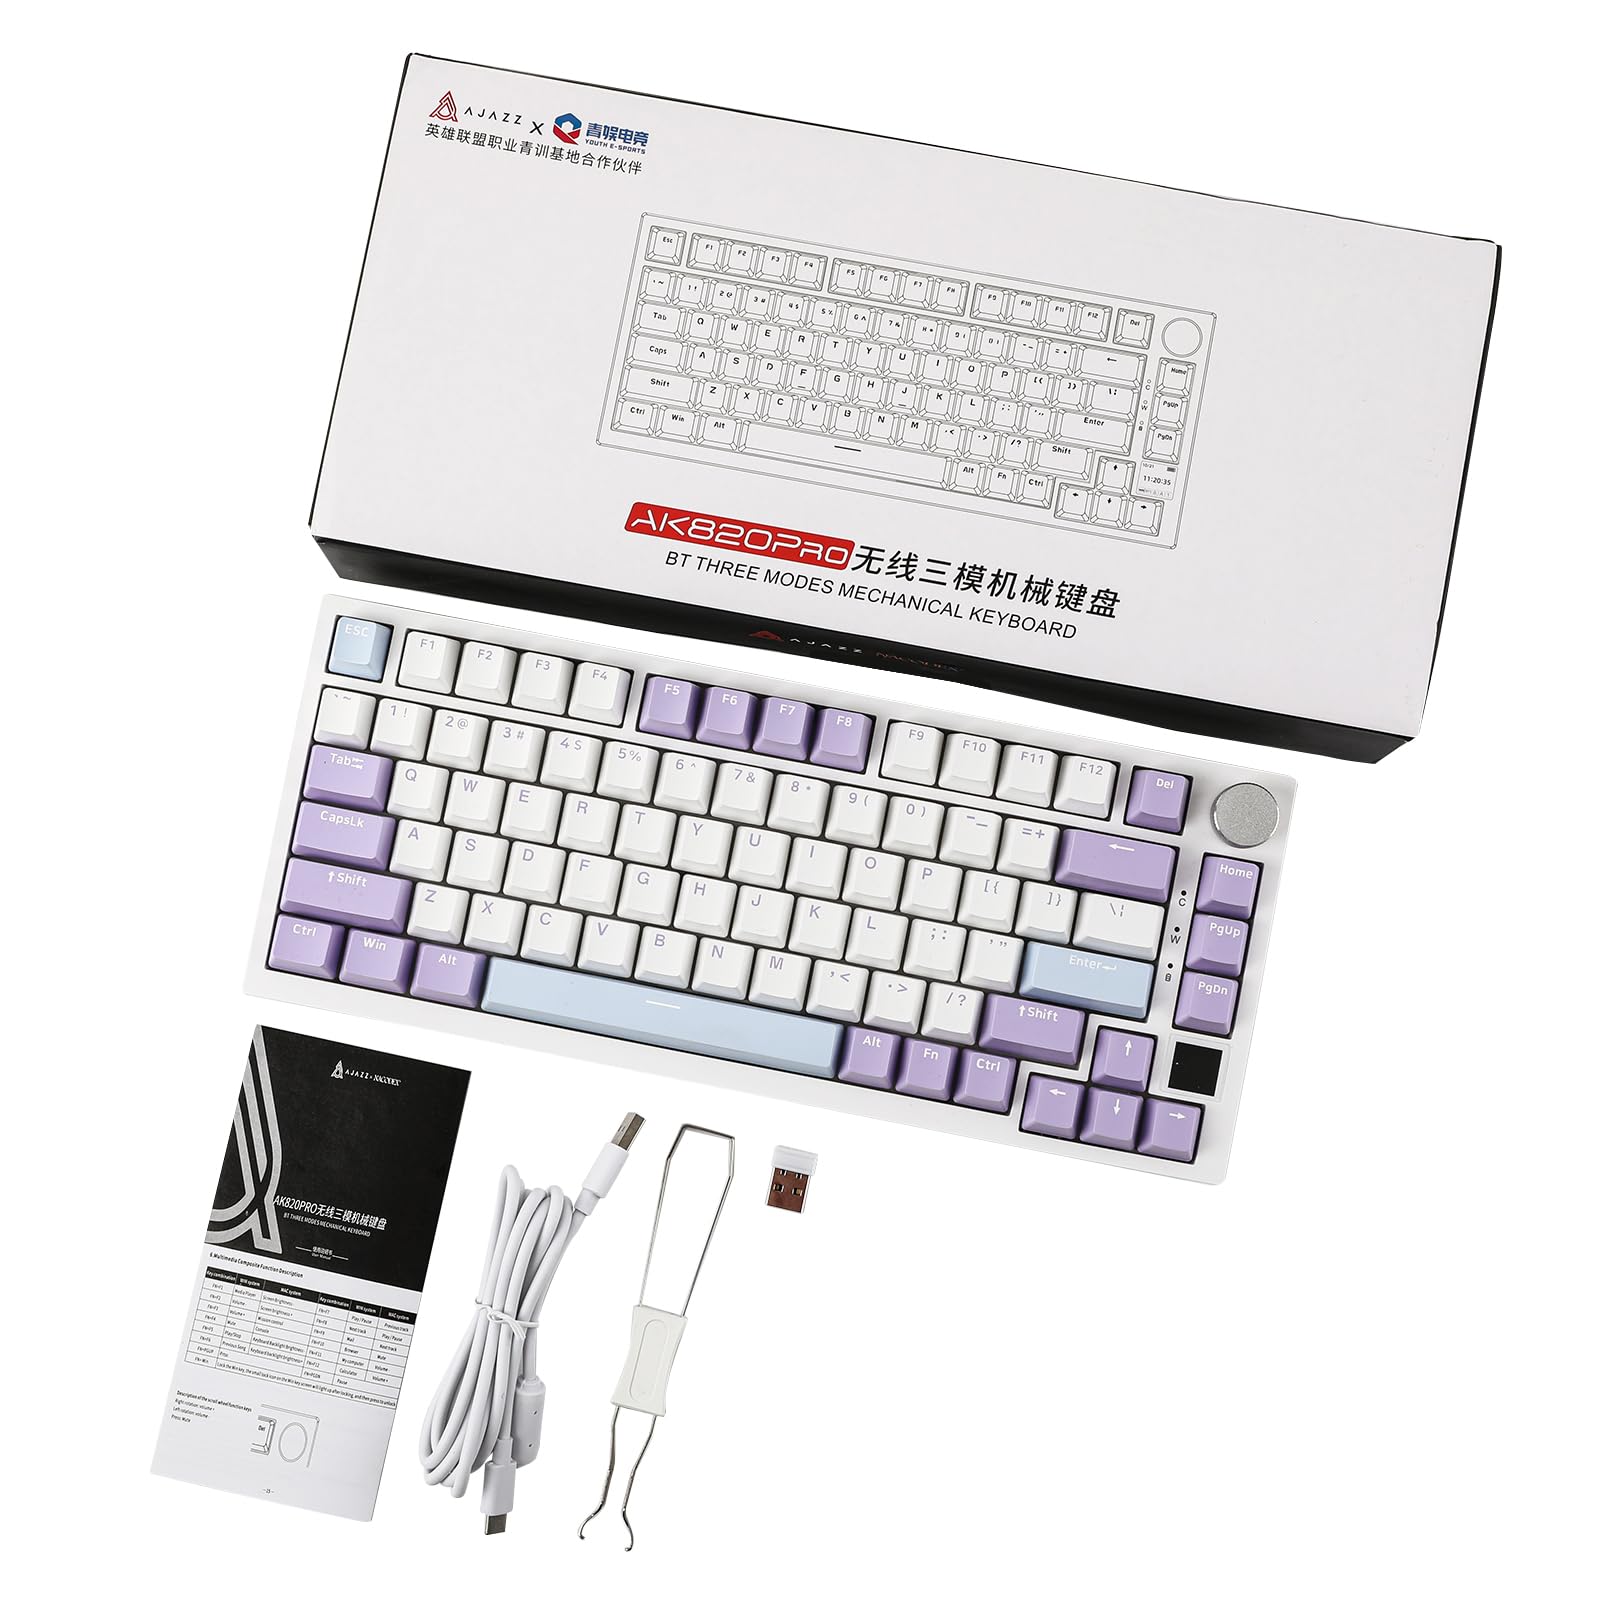 EPOMAKER Ajazz AK820 Pro 75% Mechanical Keyboard, Gasket-Mounted Gaming Keyboard with TFT Smart Display&Knob, Bluetooth 5.1/2.4G Wireless/Type-C Wired Custom Keyboard (Purple, Flying Fish Switch)